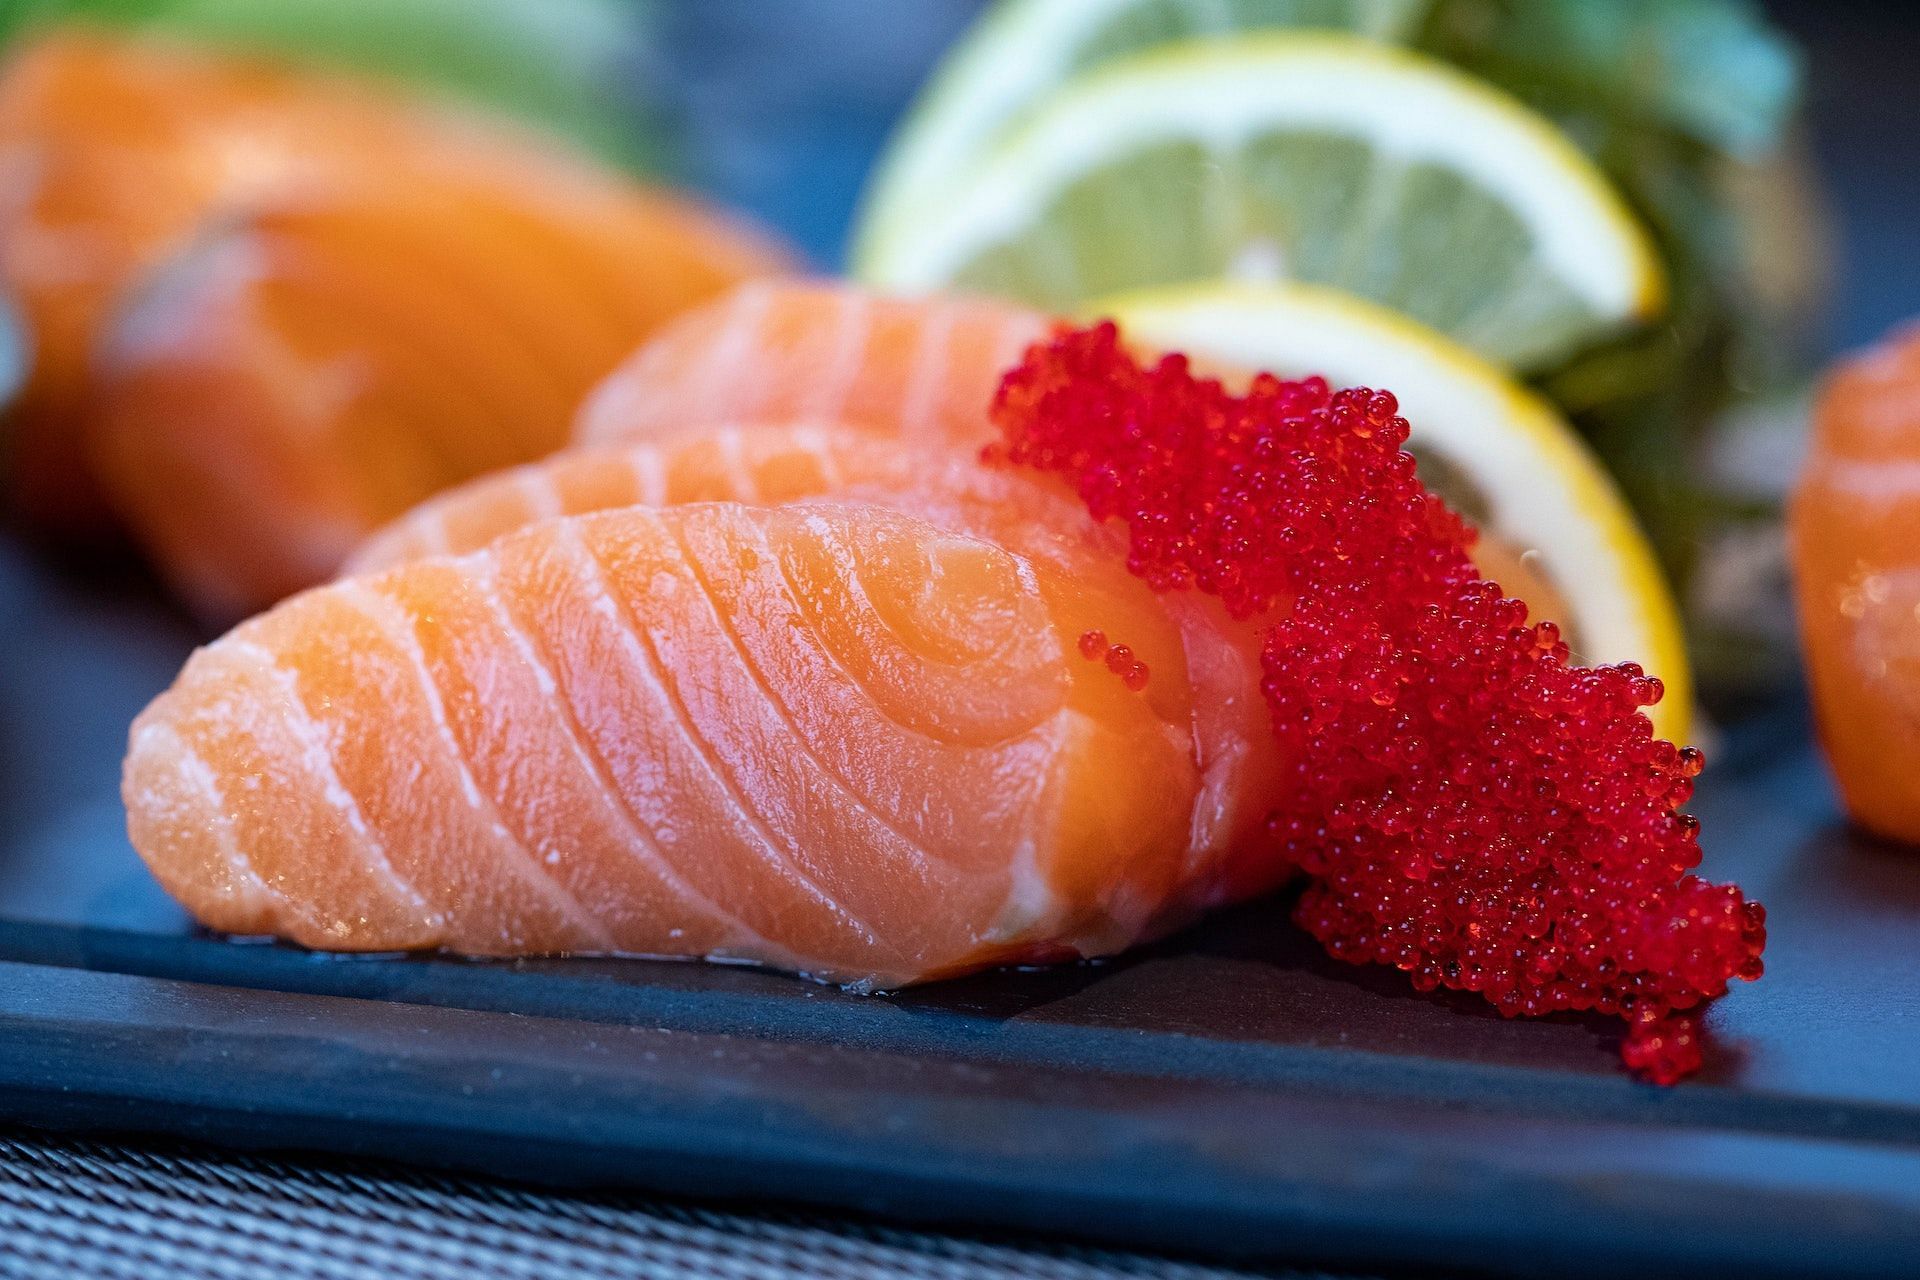 Fatty fish are the healthiest foods for skin. (Image via Pexels/Valeria Boltneva)